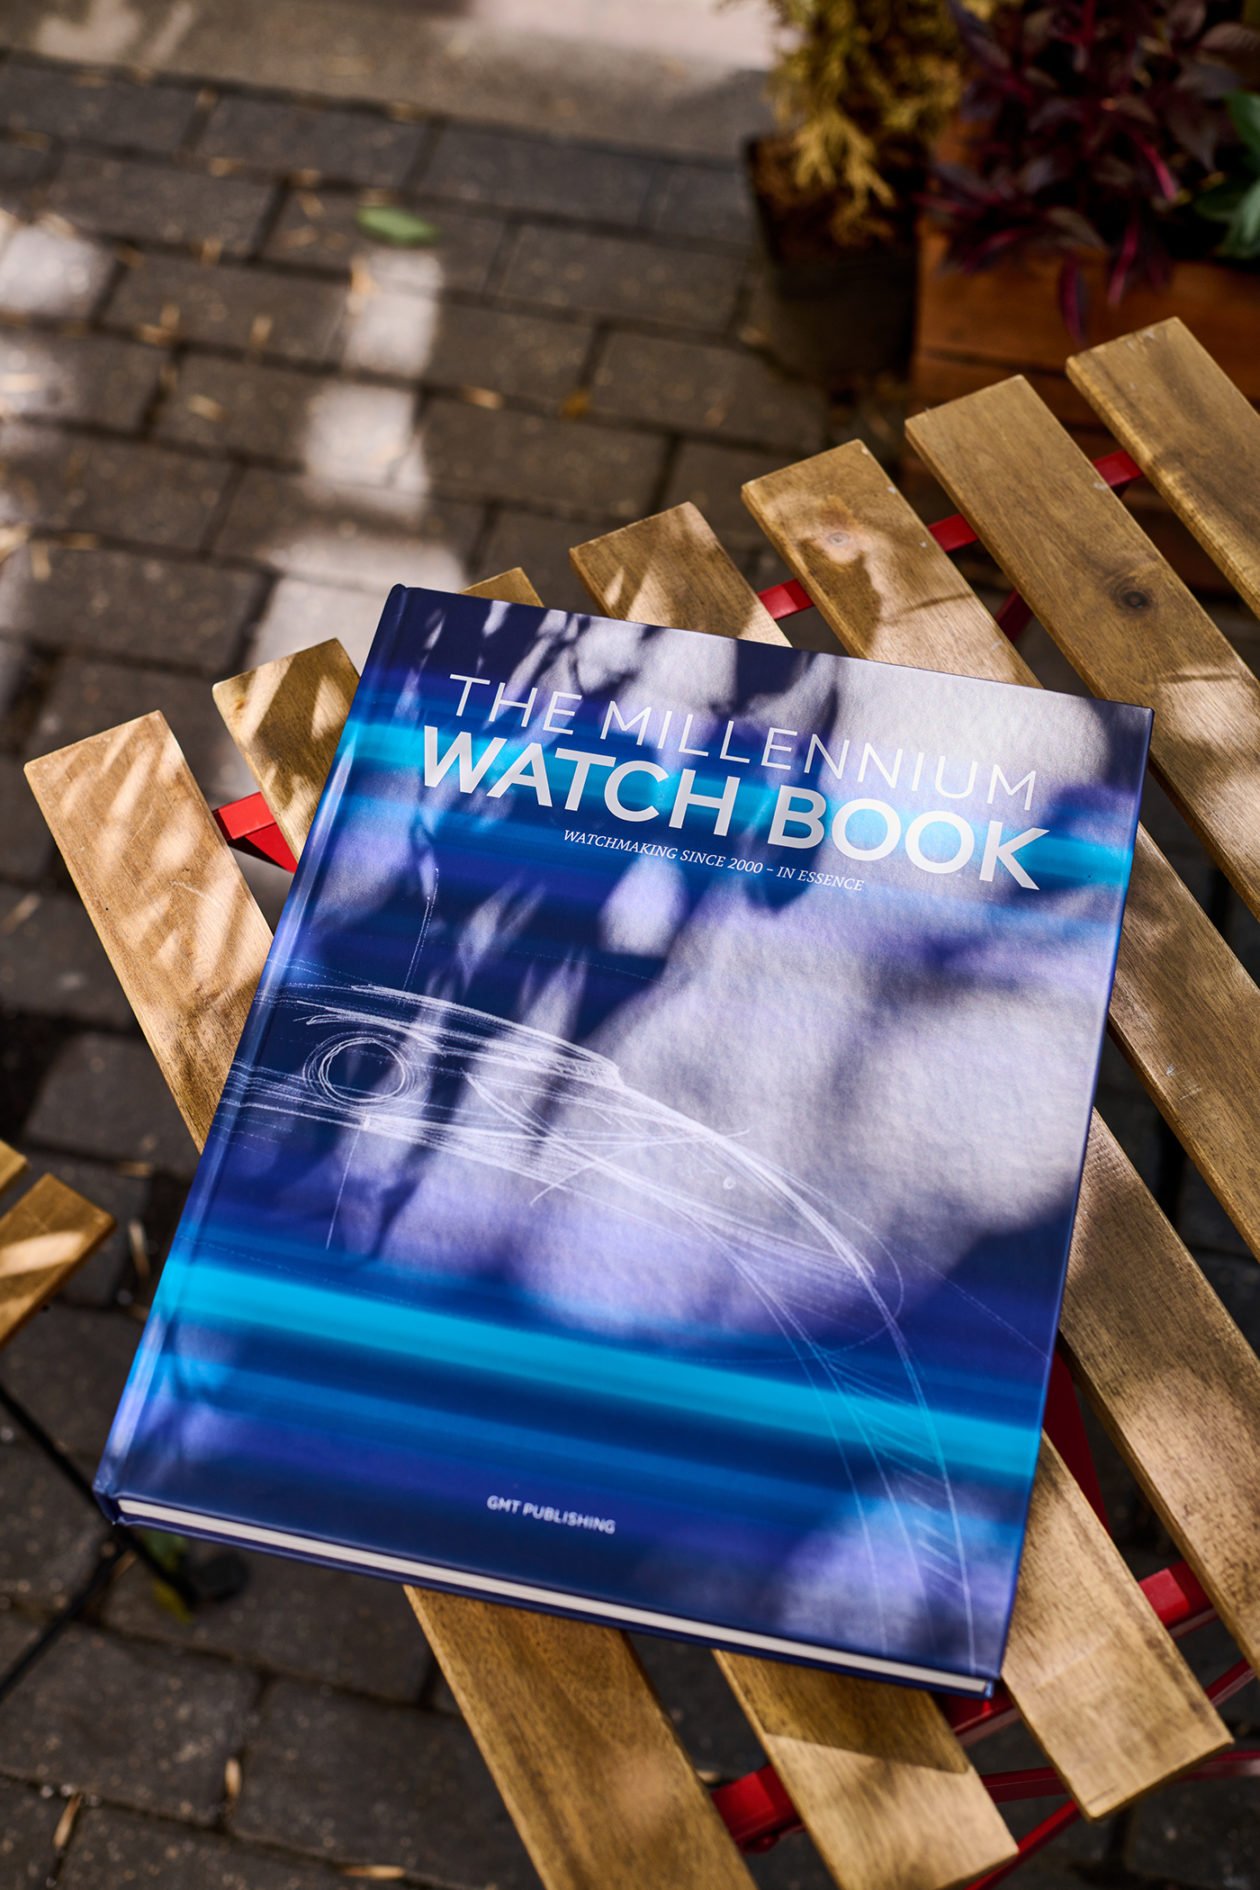 The Millennium Watch Book